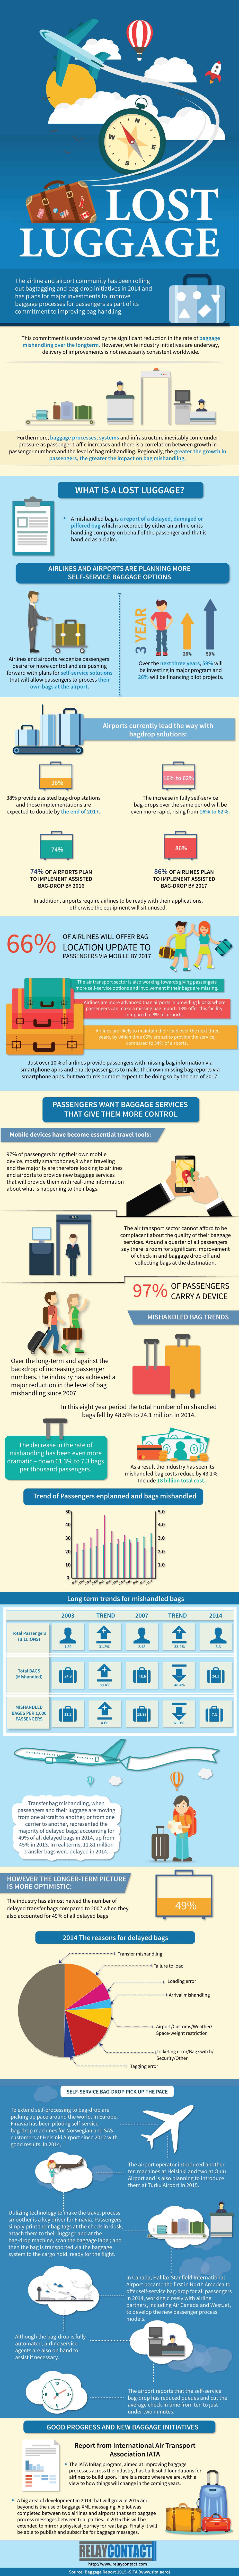 SITA 2015 Baggage Report: Lost Luggage